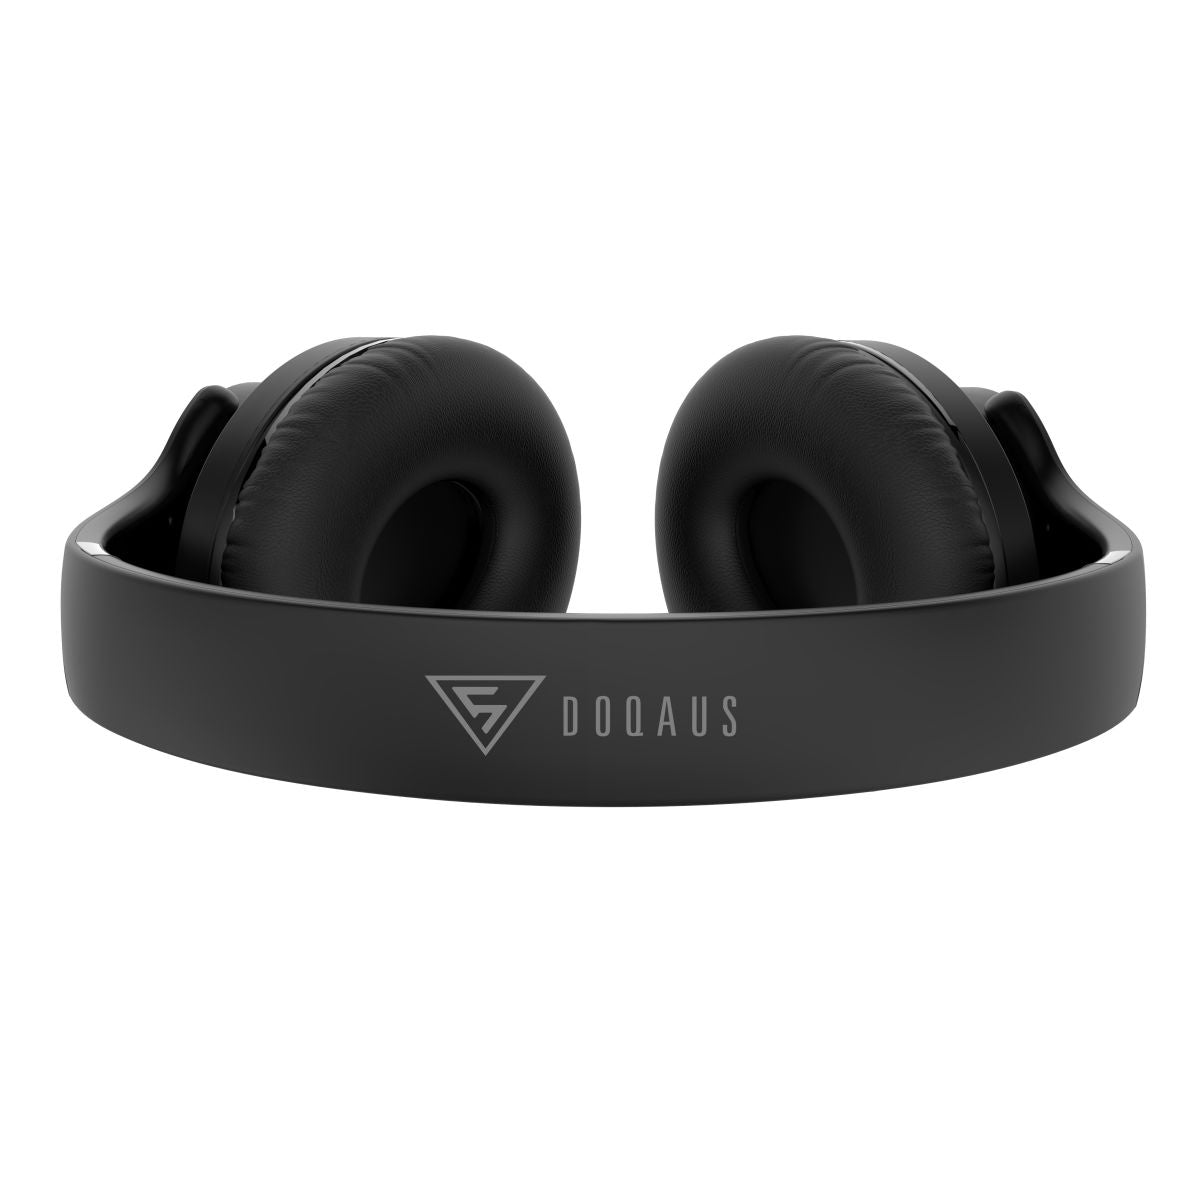 DOQAUS VOGUE 3 Bluetooth Headphones Black - Hugmie